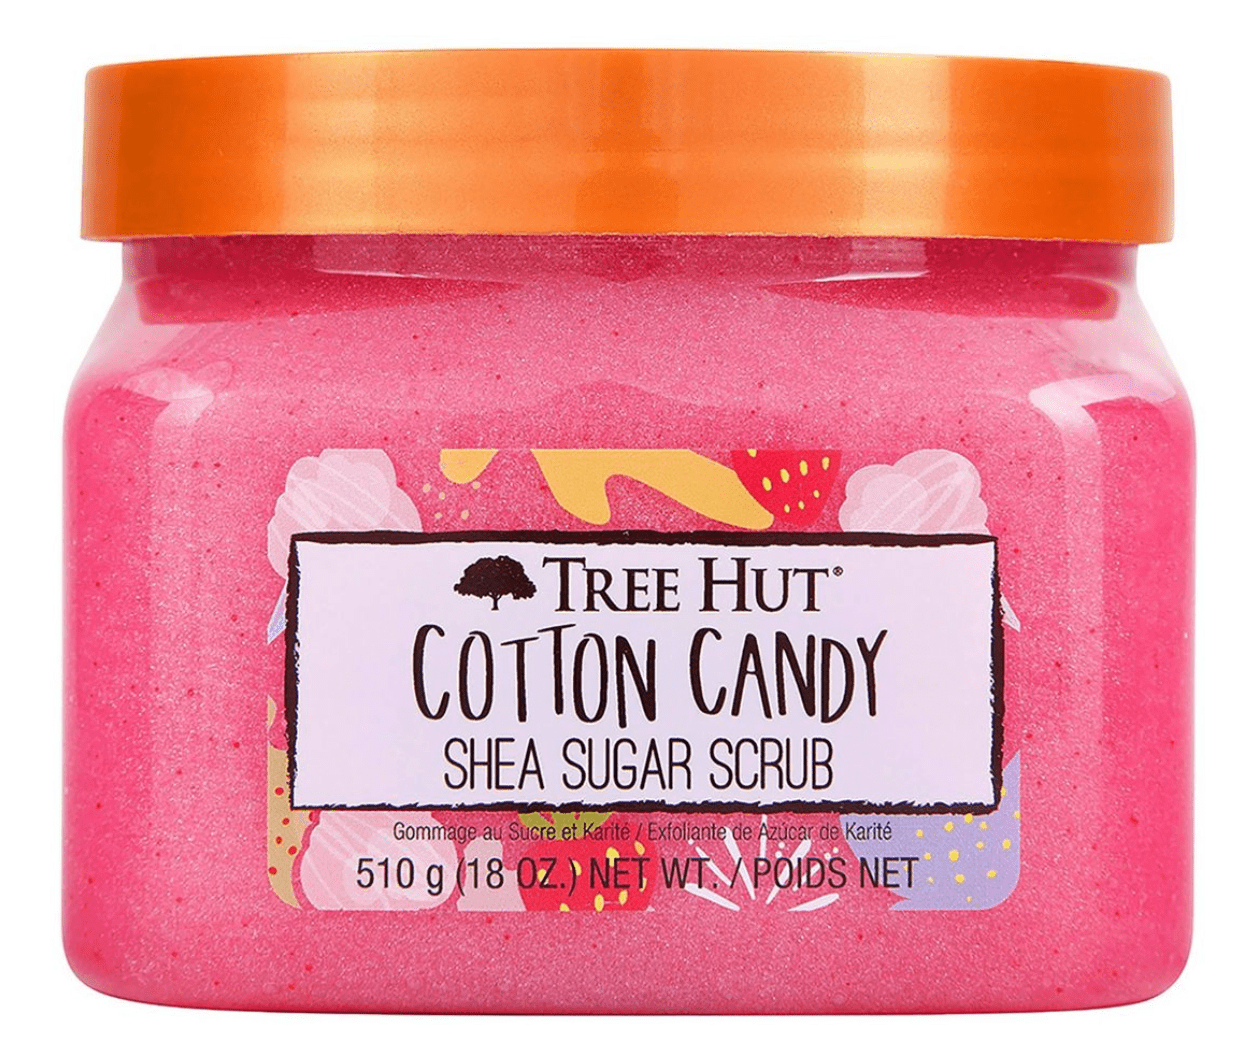 Tree hut - "cotton candy" body scrub - 510g - Tree Hut - Ethni Beauty Market